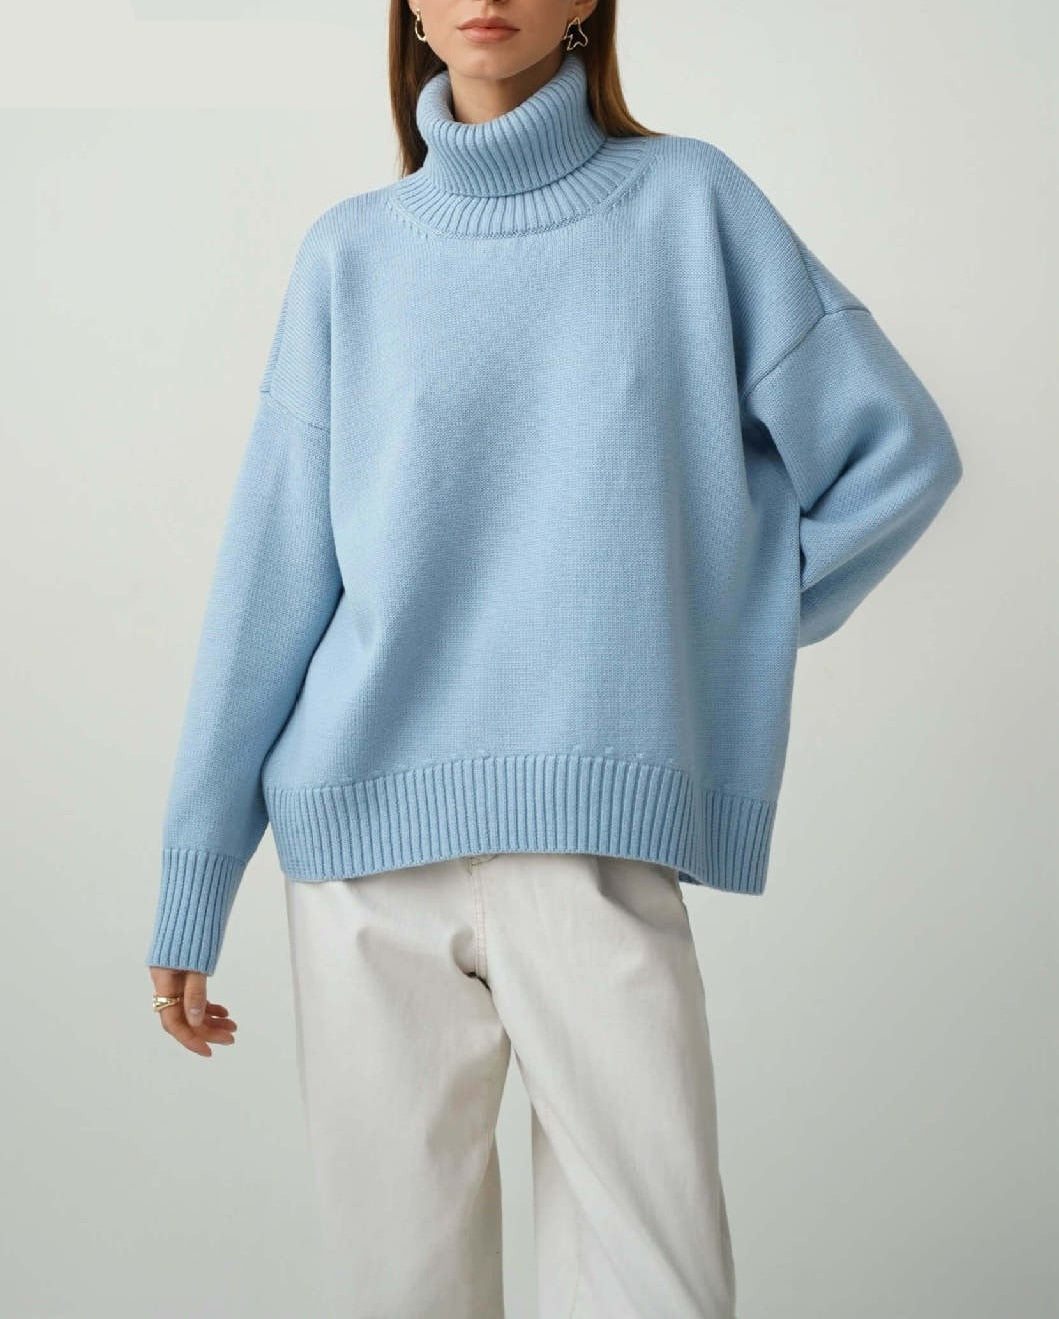 Women Oversized Casual Turtleneck Sweater